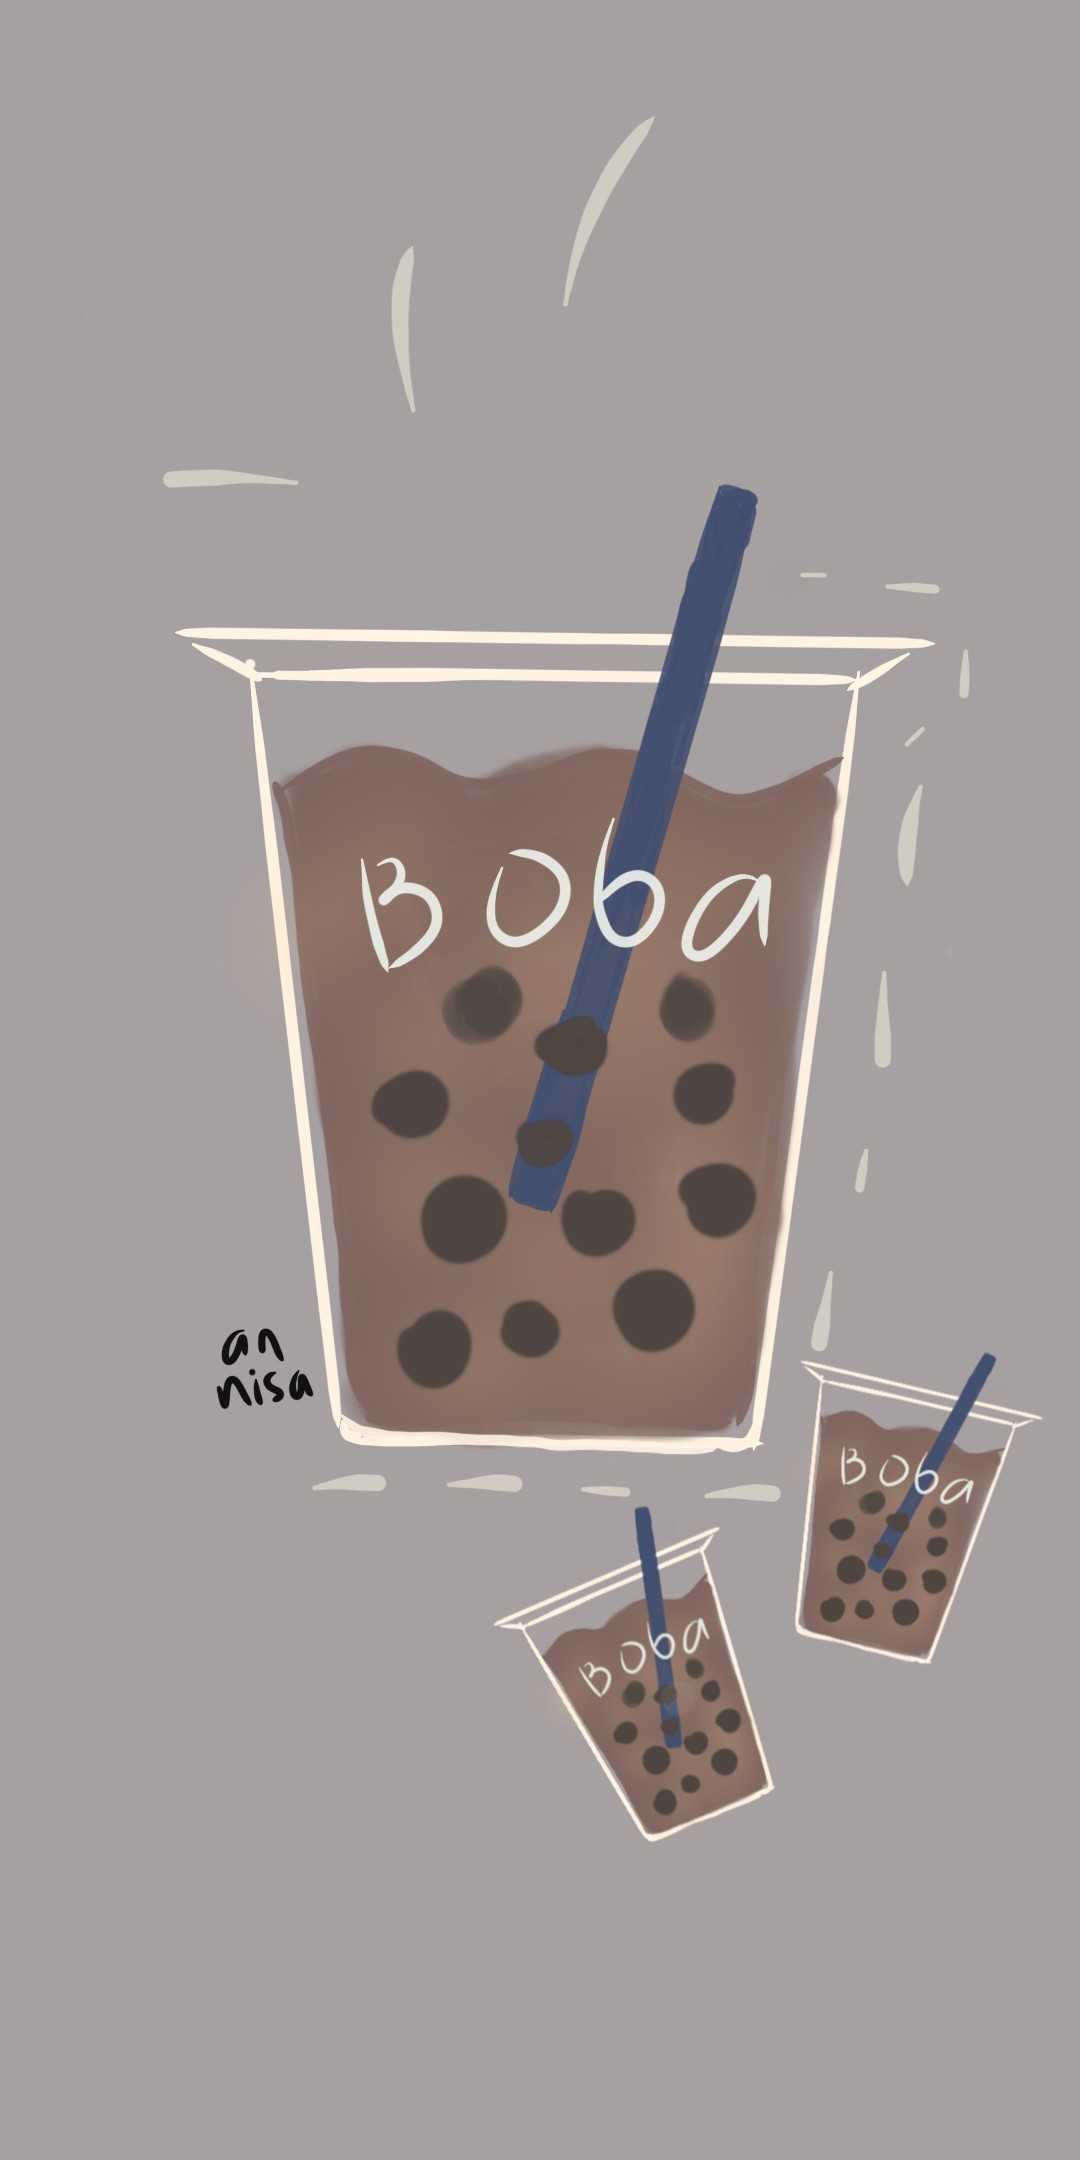 Boba tea wallpaper I made for my phone! - Boba, chocolate